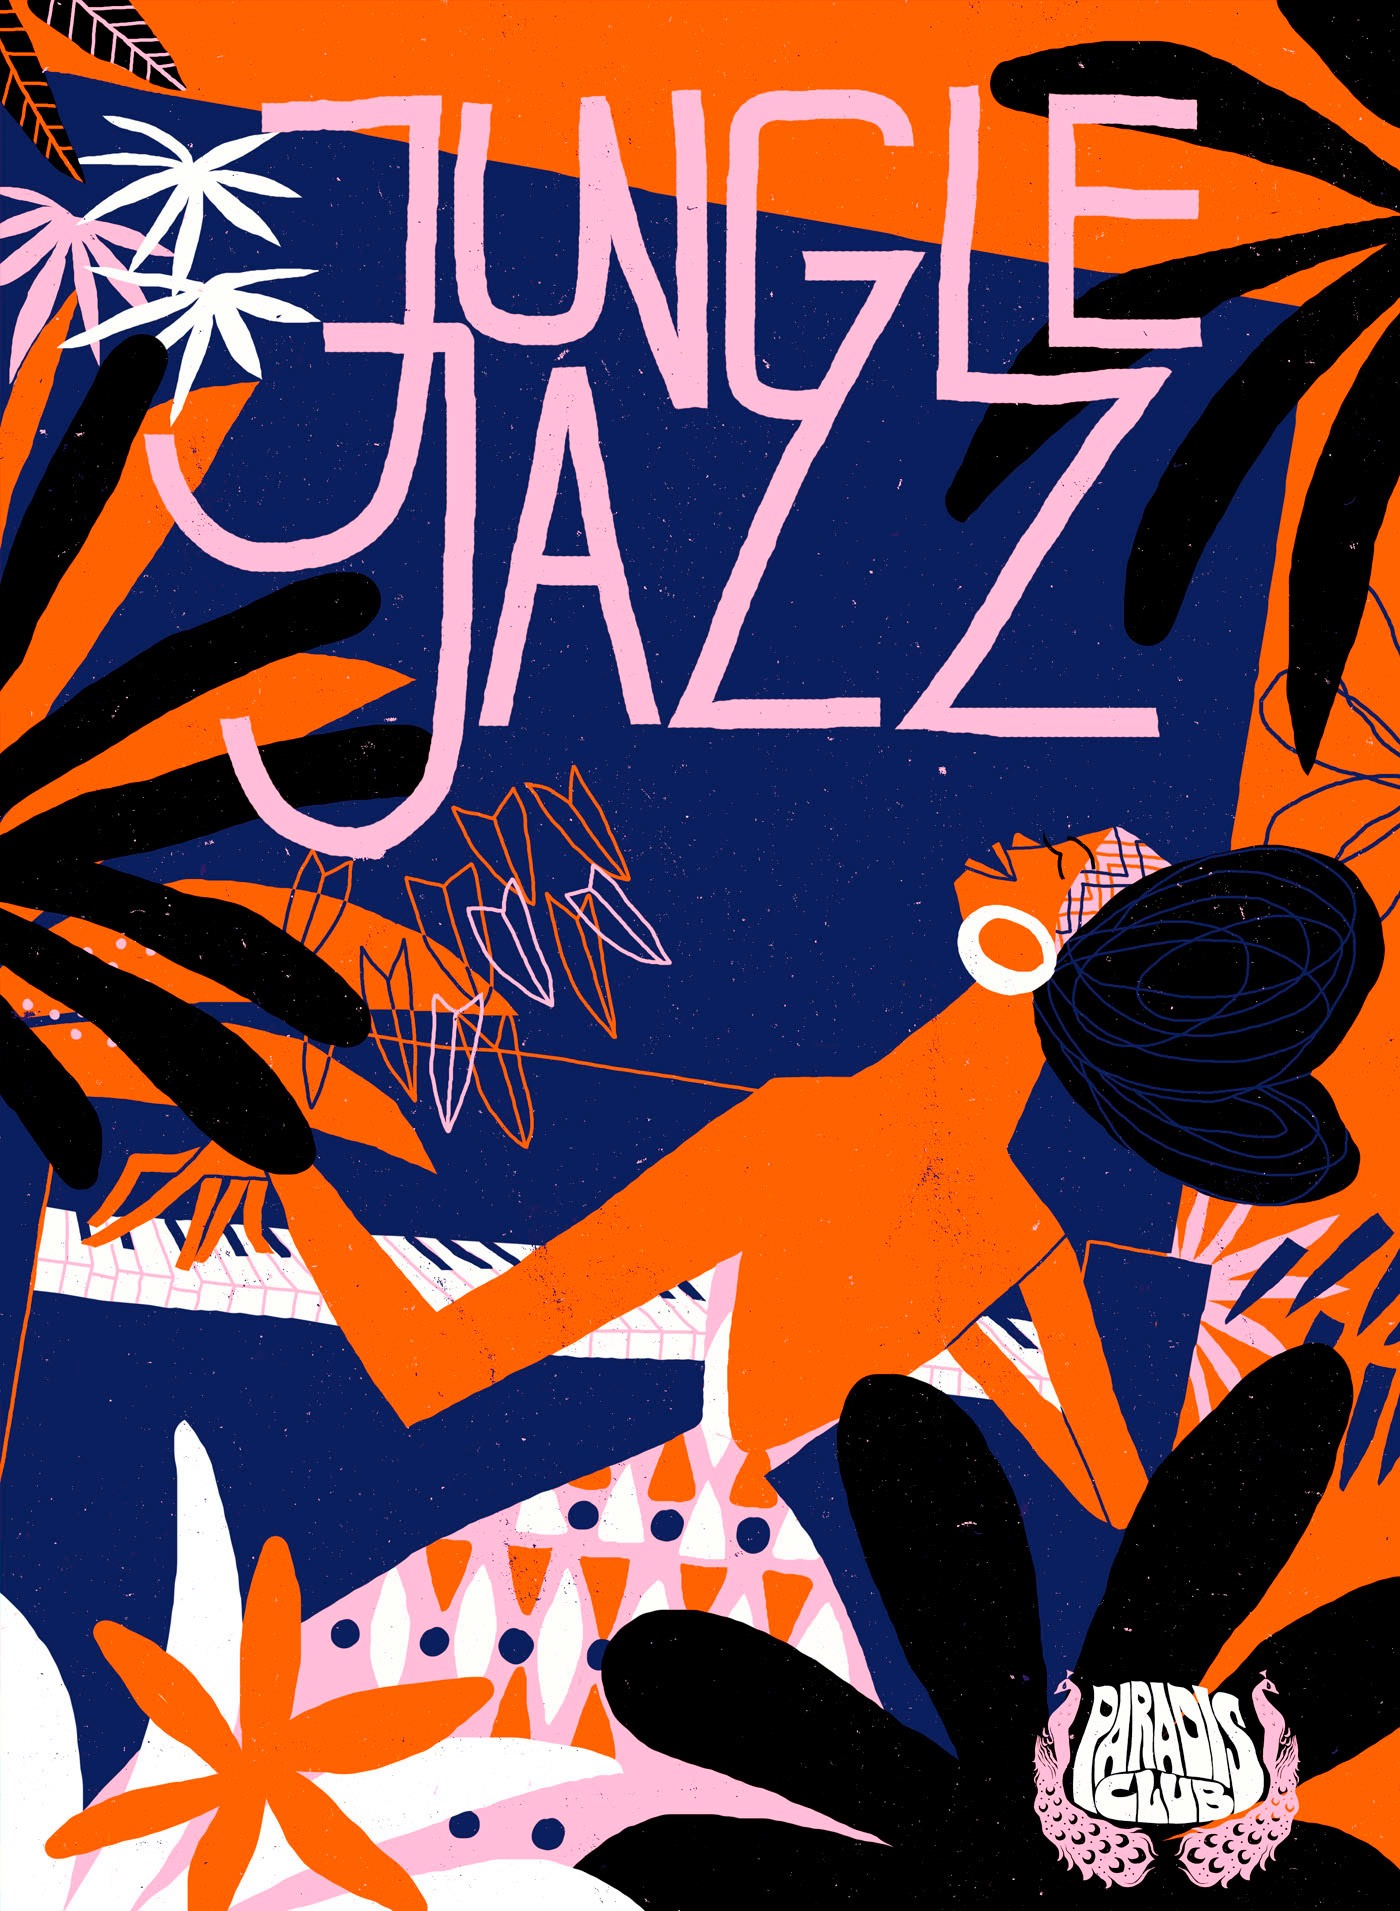 André Ducci作品：Jungle Jazz音乐节插画海报设计